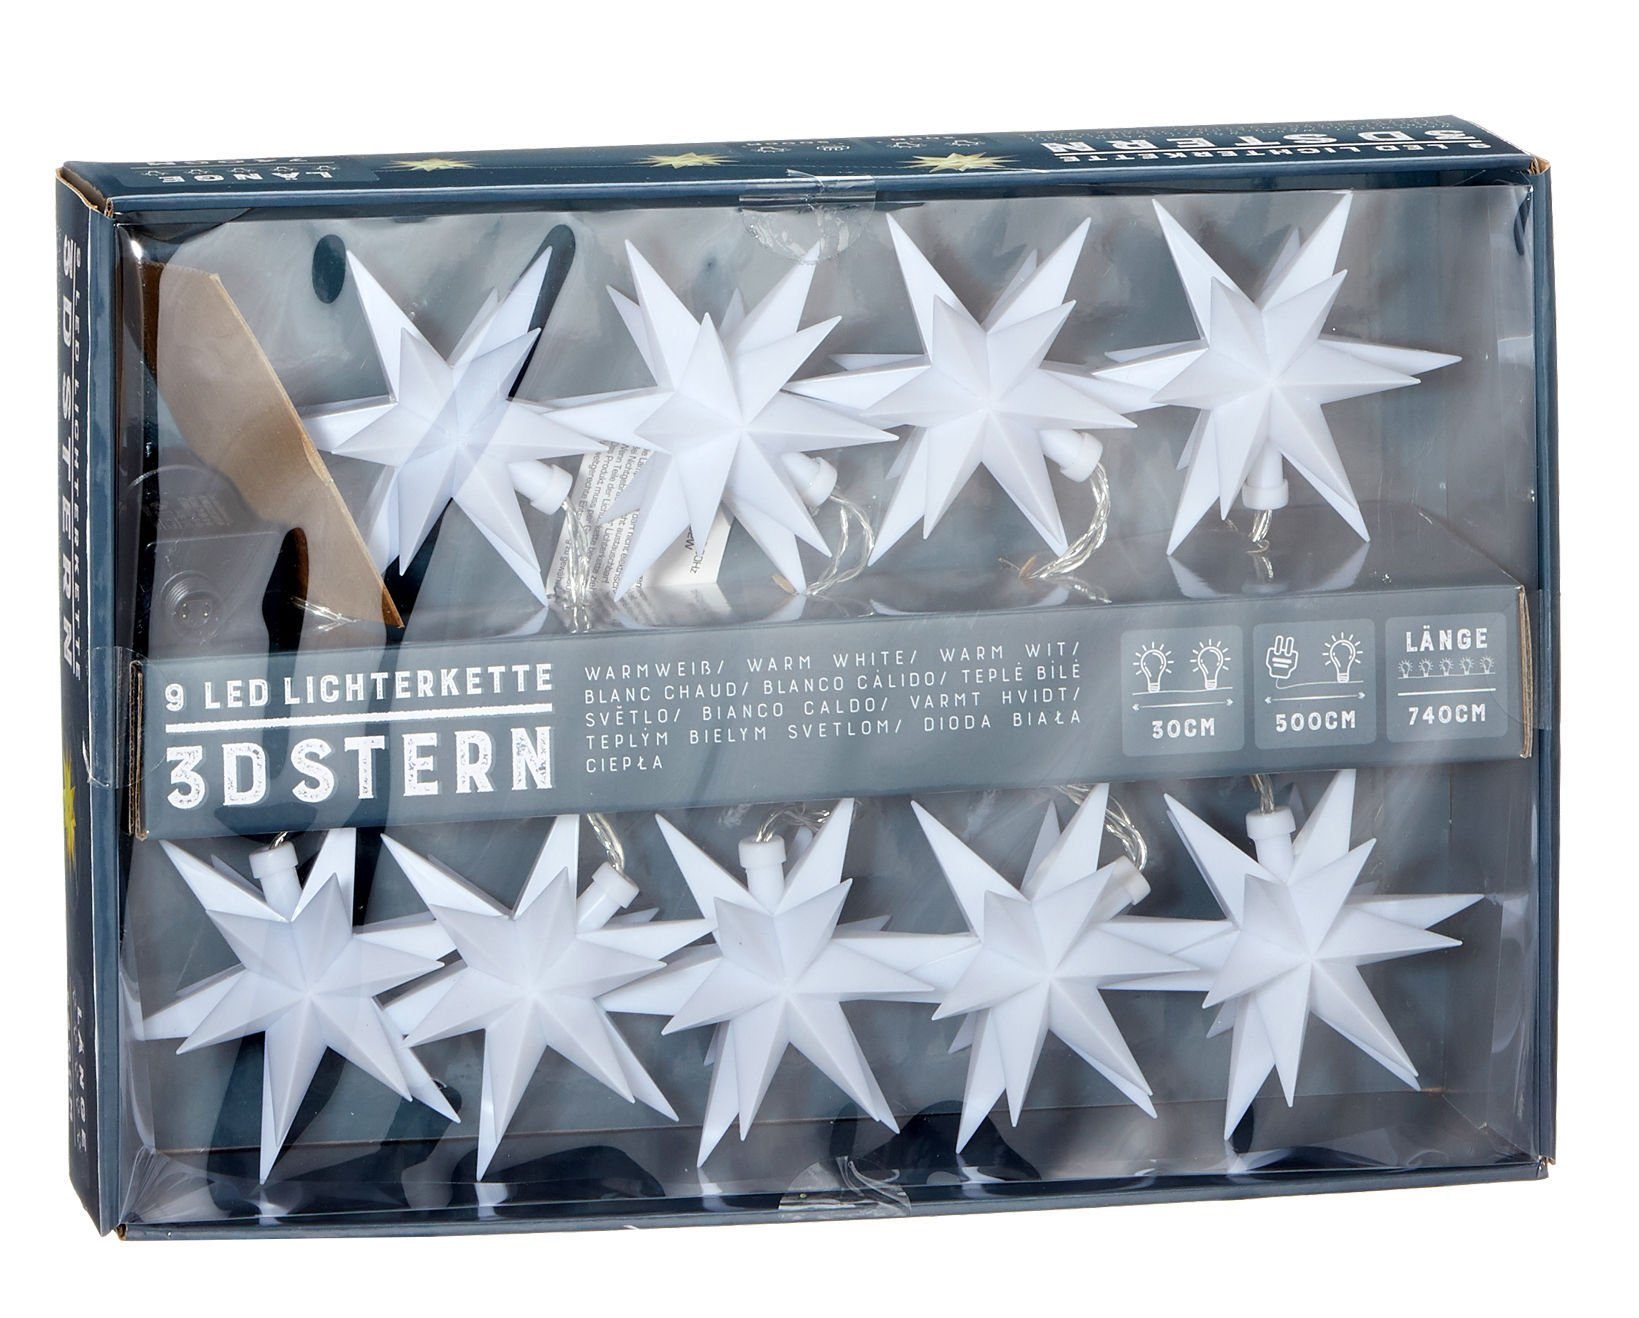 9 Spetebo Stern mit weiß, Sterne LED-Girlande 3D - Lichterkette Sterne in 9 LED